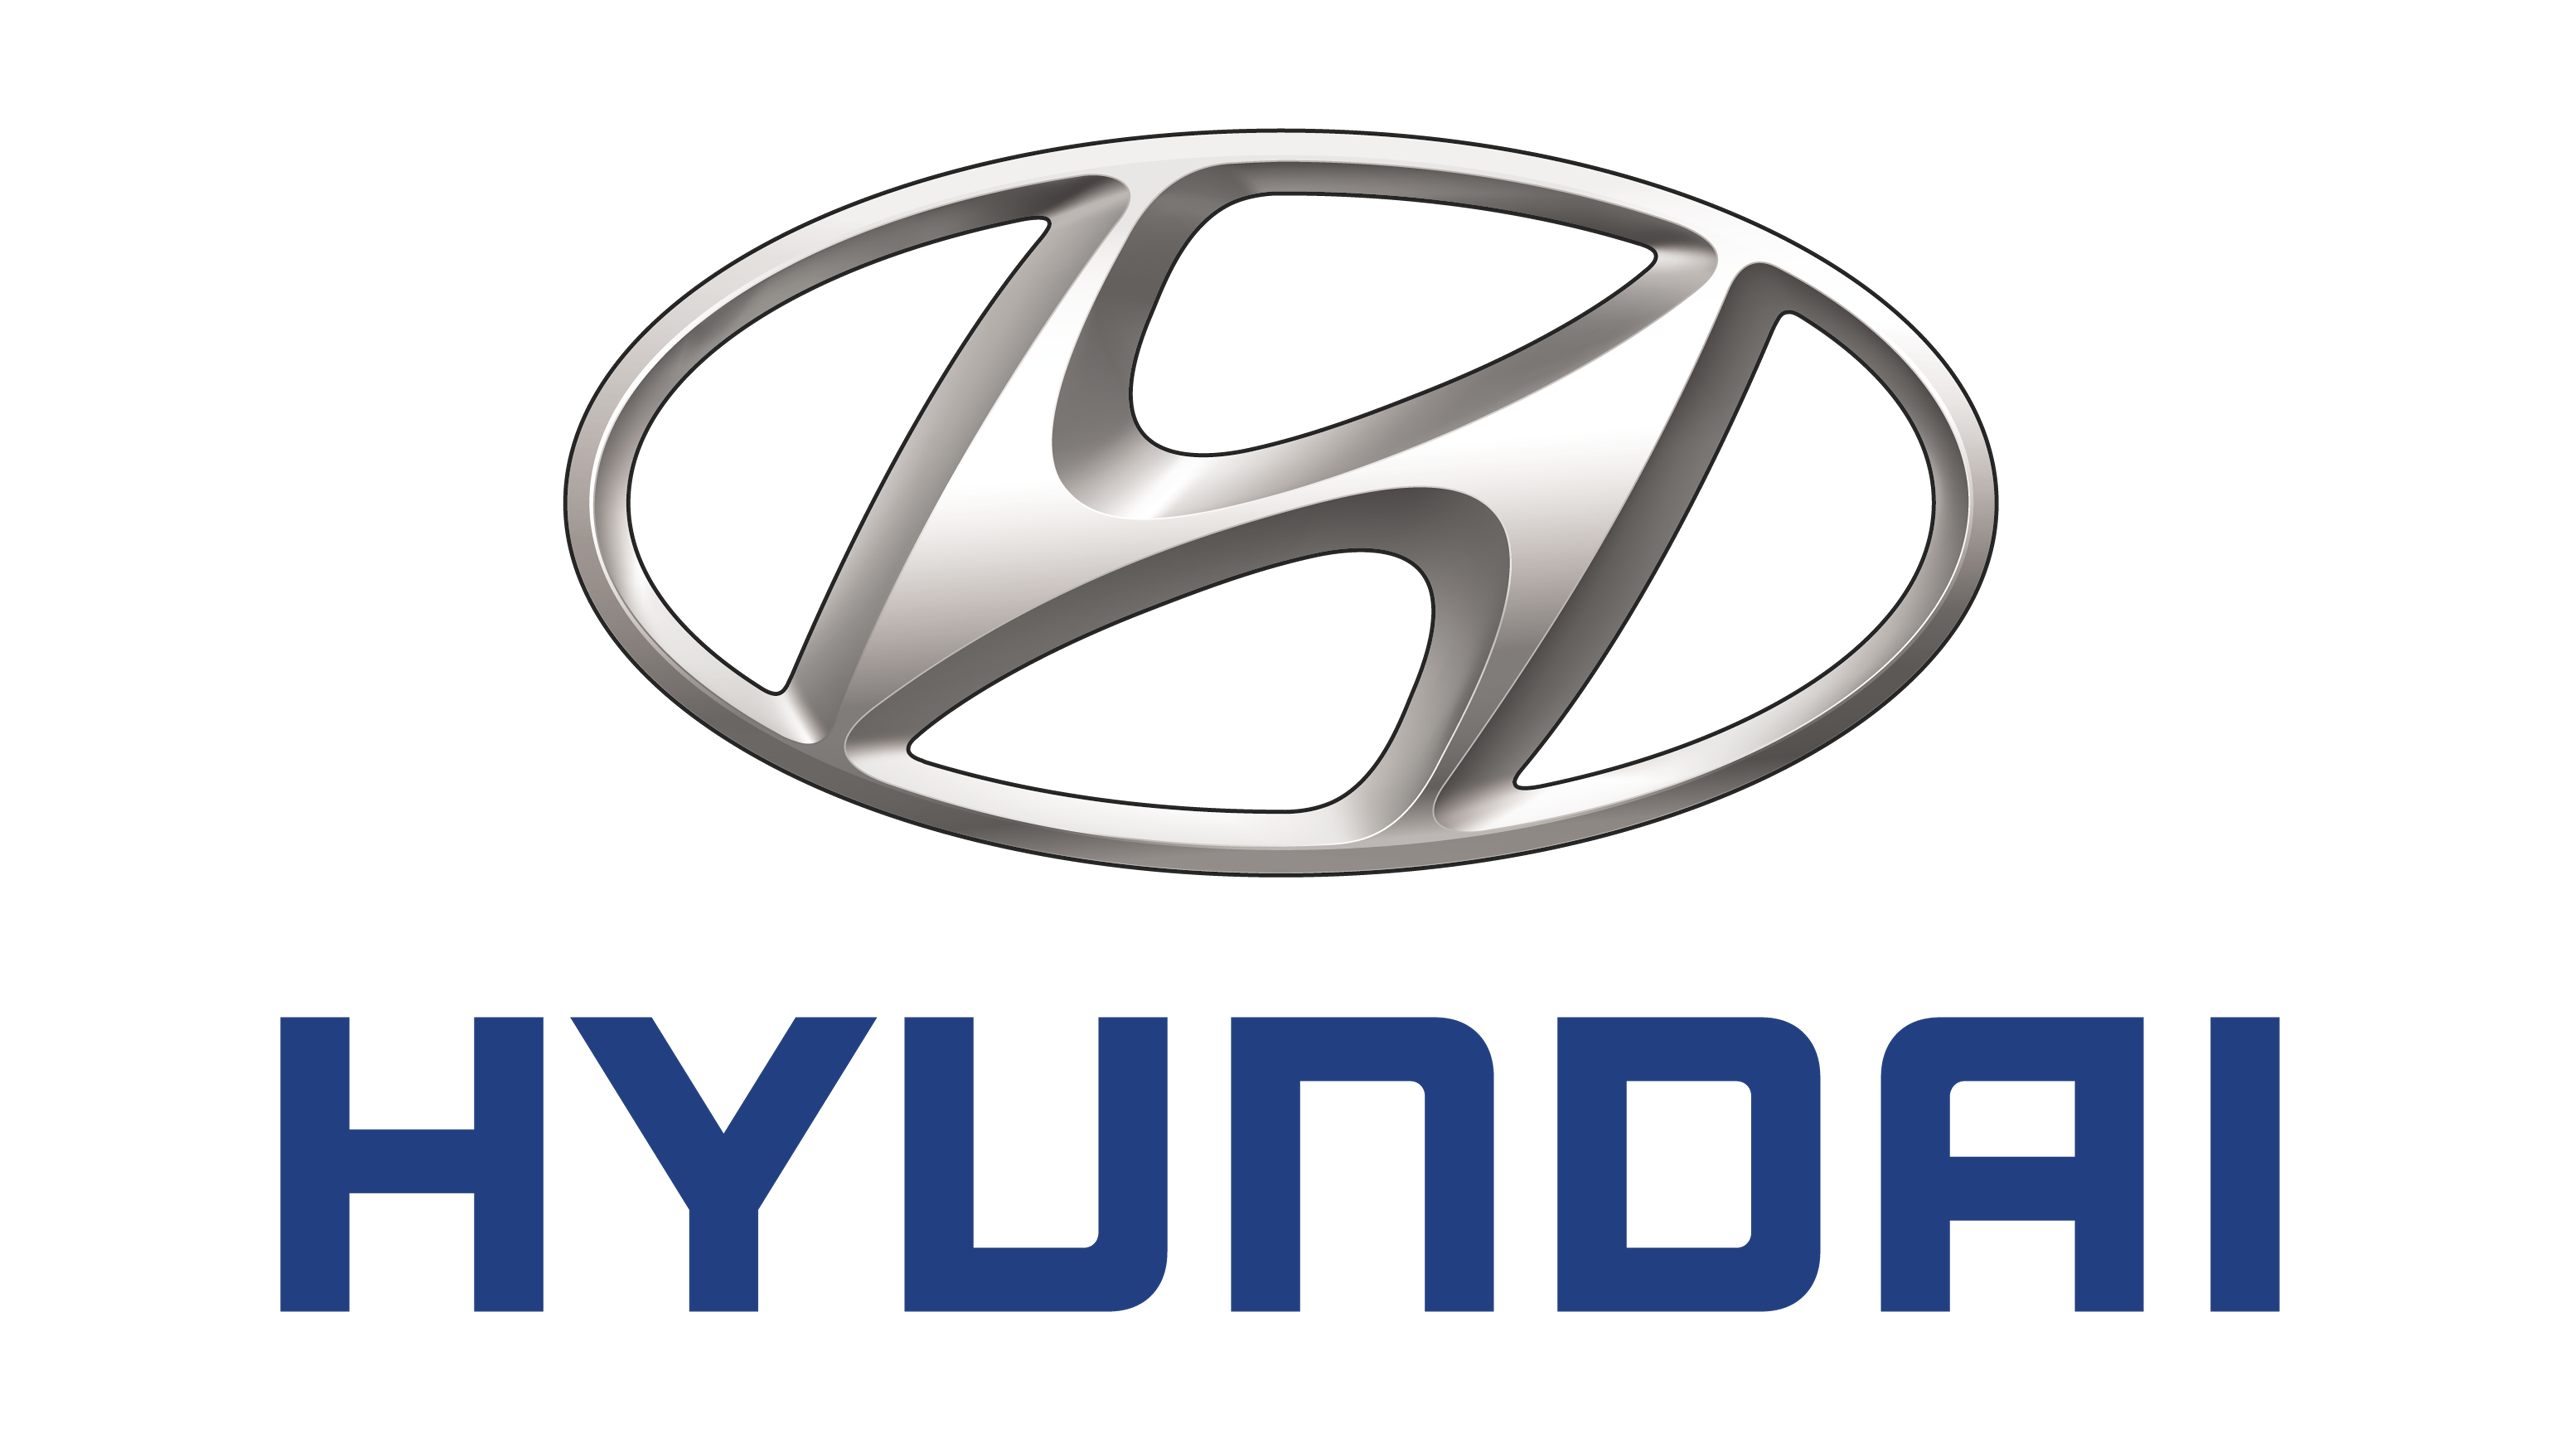 Hyundai-logo-grey-2560x1440